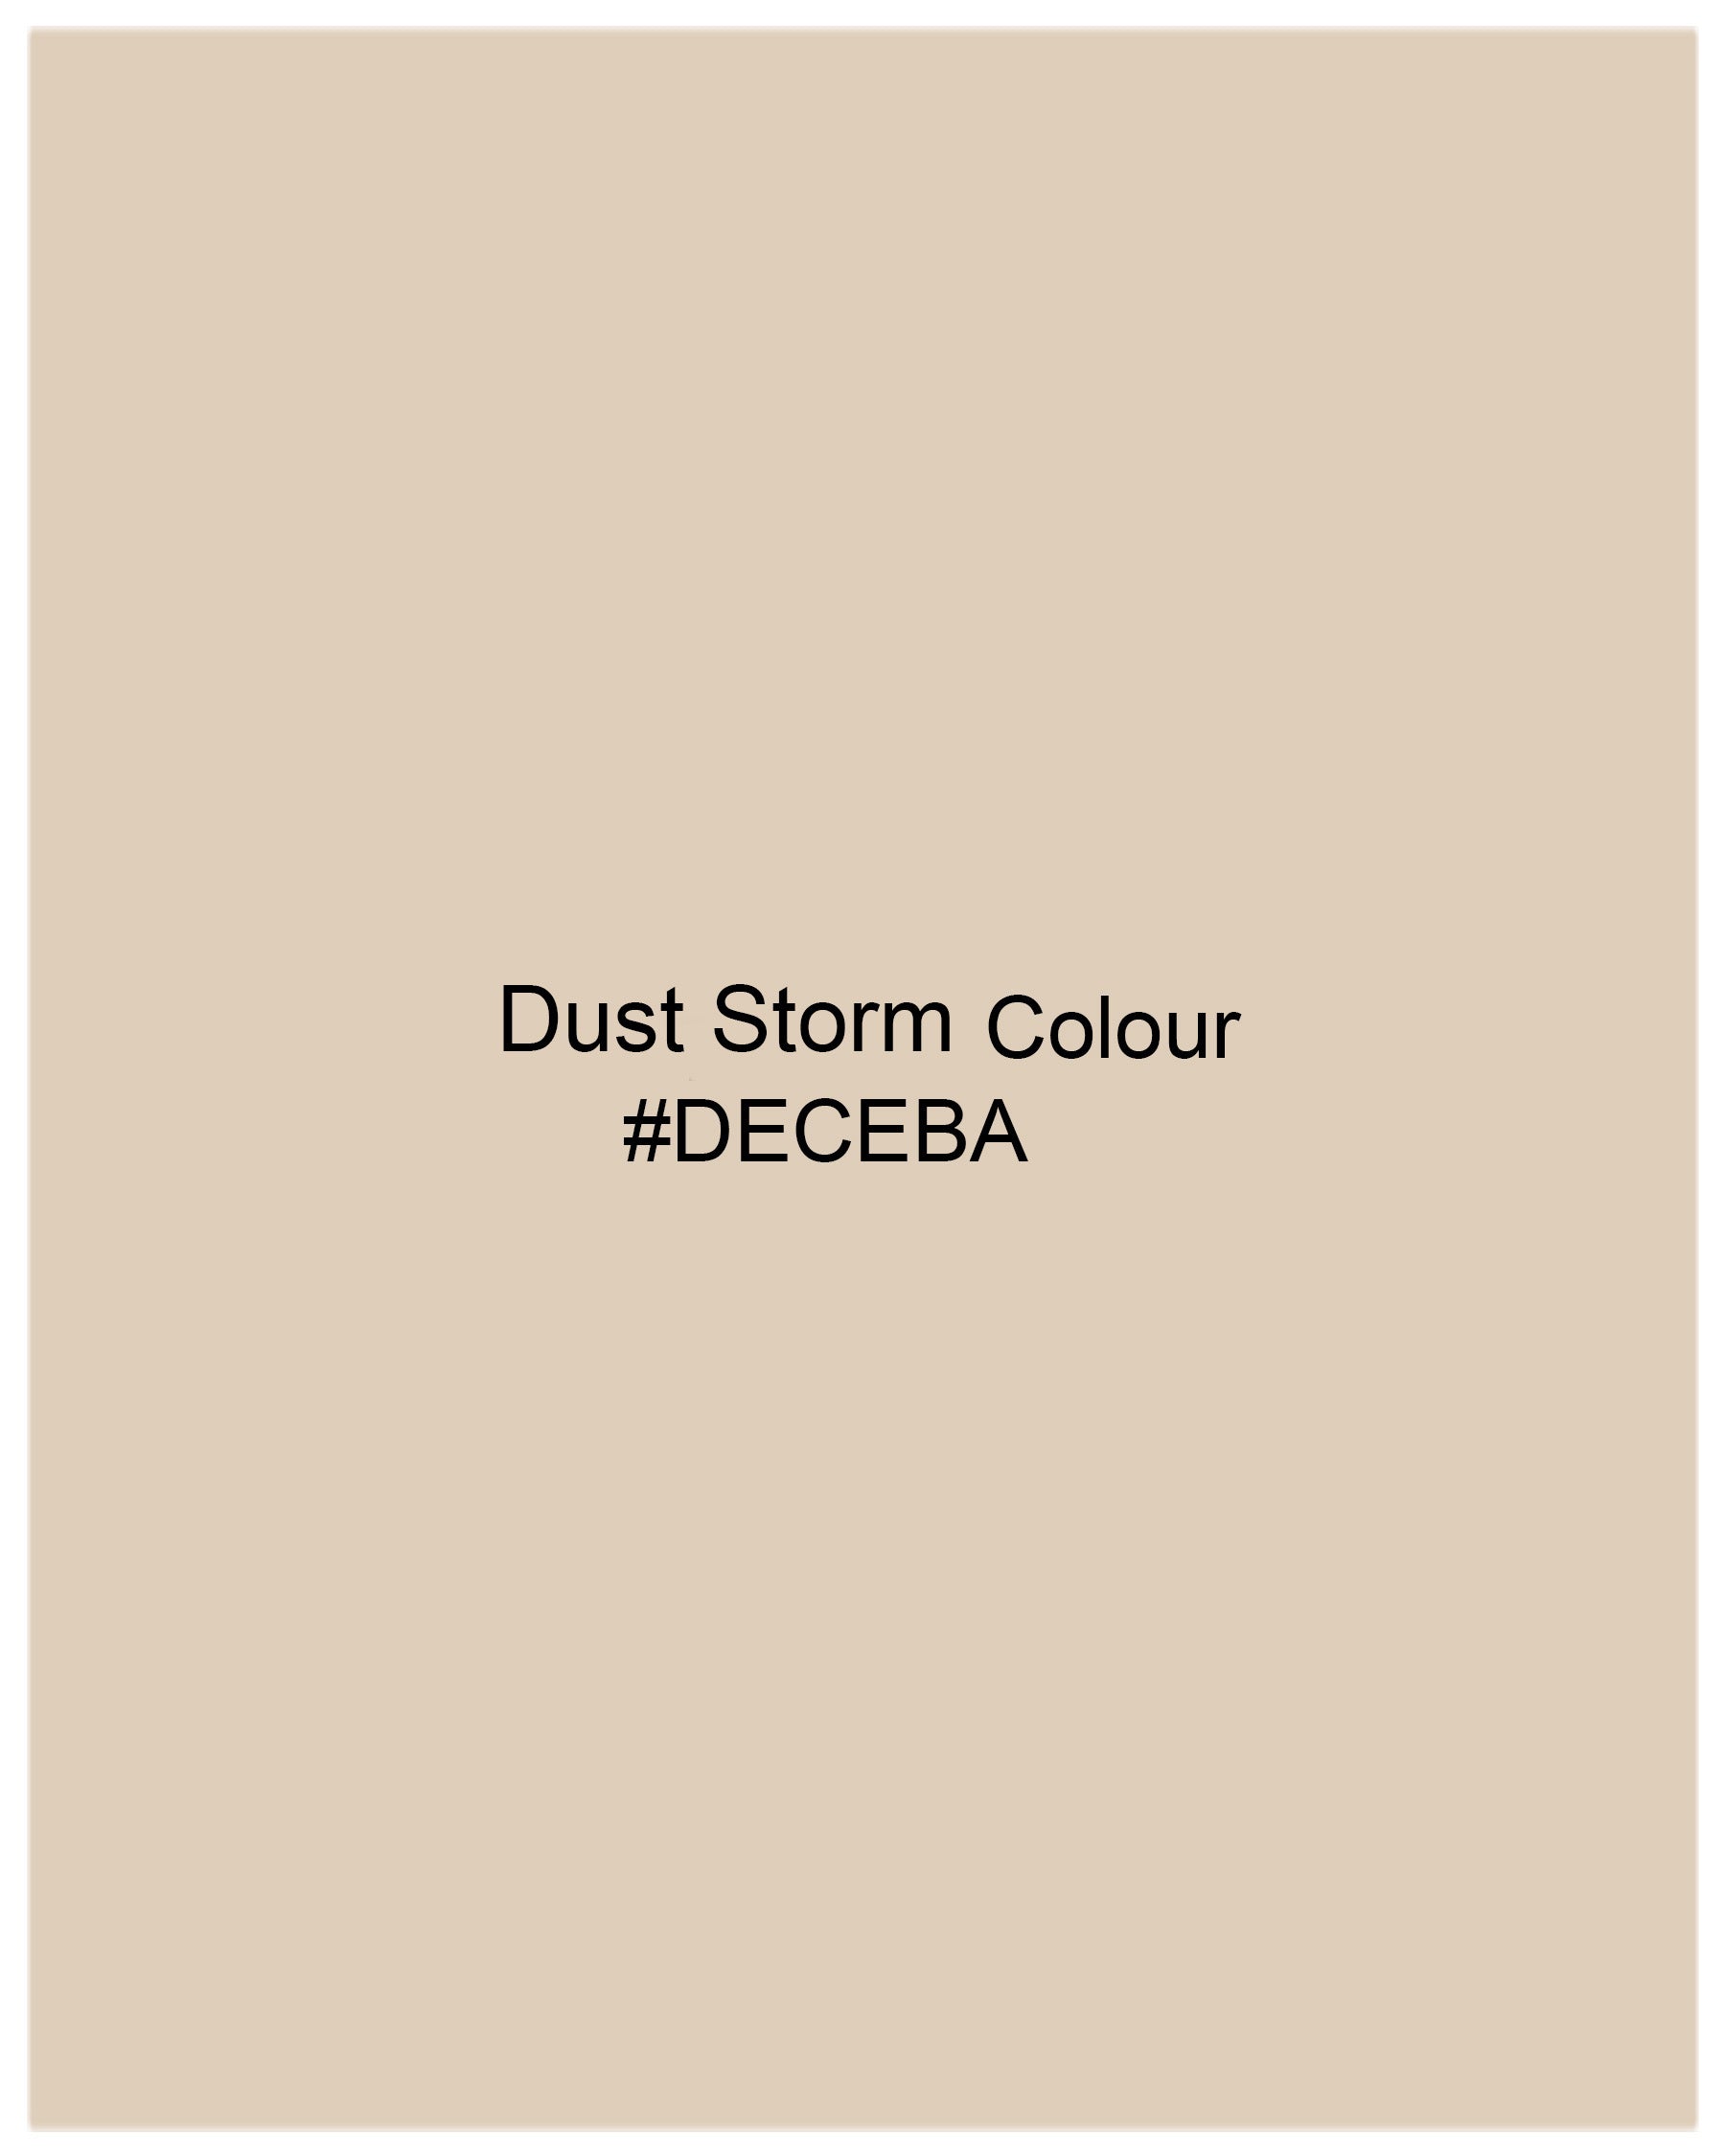 Dust Storm Cream Dobby Textured Premium Giza Cotton Shirt 7909-BLE -38,7909-BLE -H-38,7909-BLE -39,7909-BLE -H-39,7909-BLE -40,7909-BLE -H-40,7909-BLE -42,7909-BLE -H-42,7909-BLE -44,7909-BLE -H-44,7909-BLE -46,7909-BLE -H-46,7909-BLE -48,7909-BLE -H-48,7909-BLE -50,7909-BLE -H-50,7909-BLE -52,7909-BLE -H-52